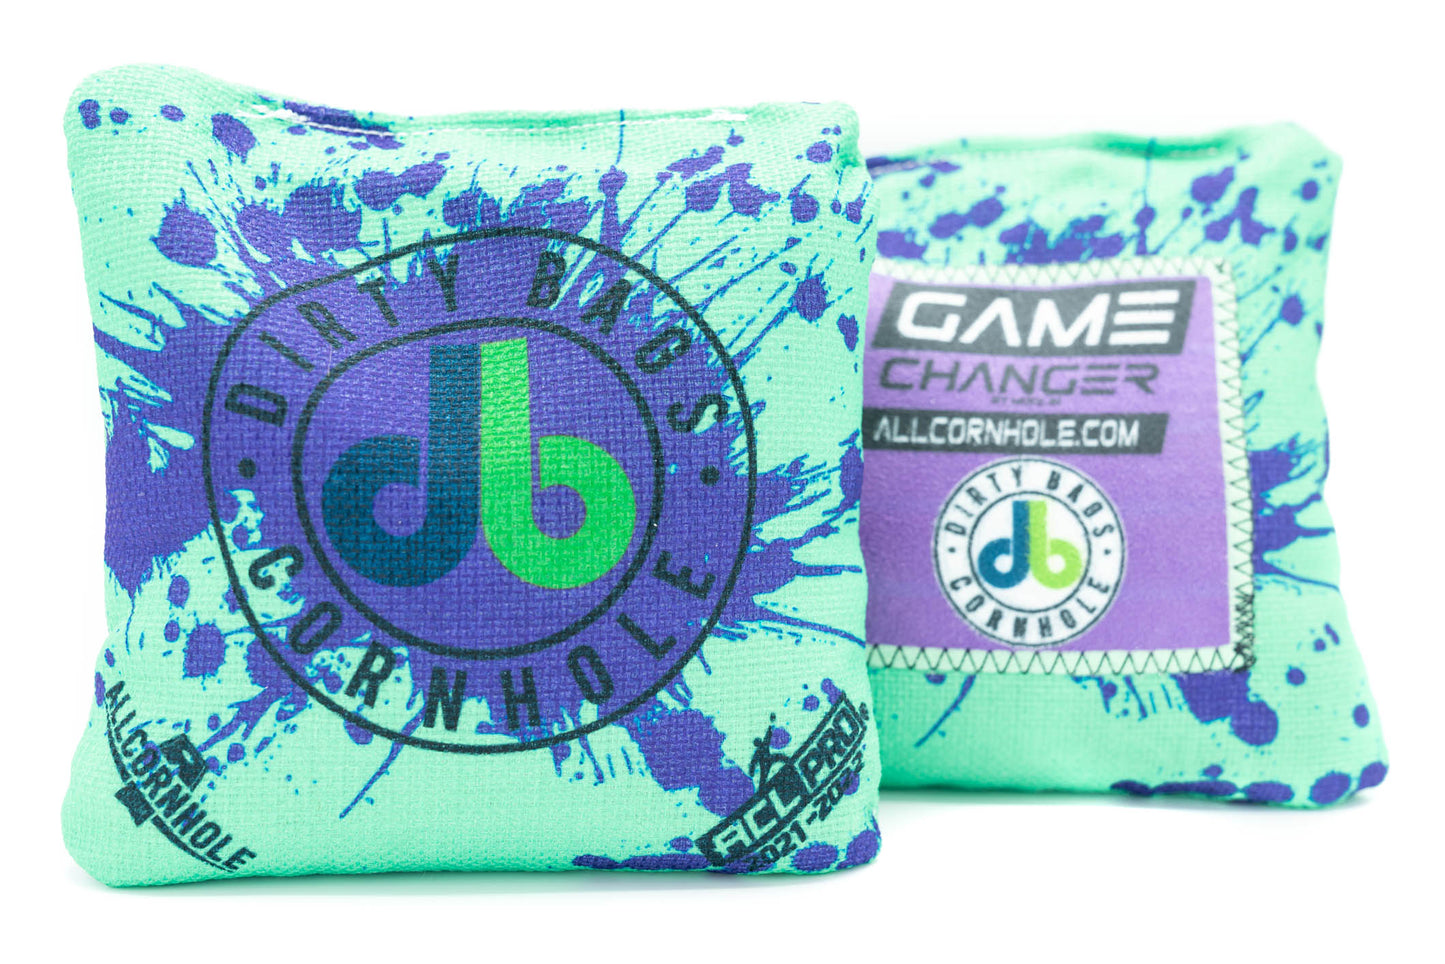 Game Changer Cornhole Bags - db Paint Splatter Edition (Set of 4)